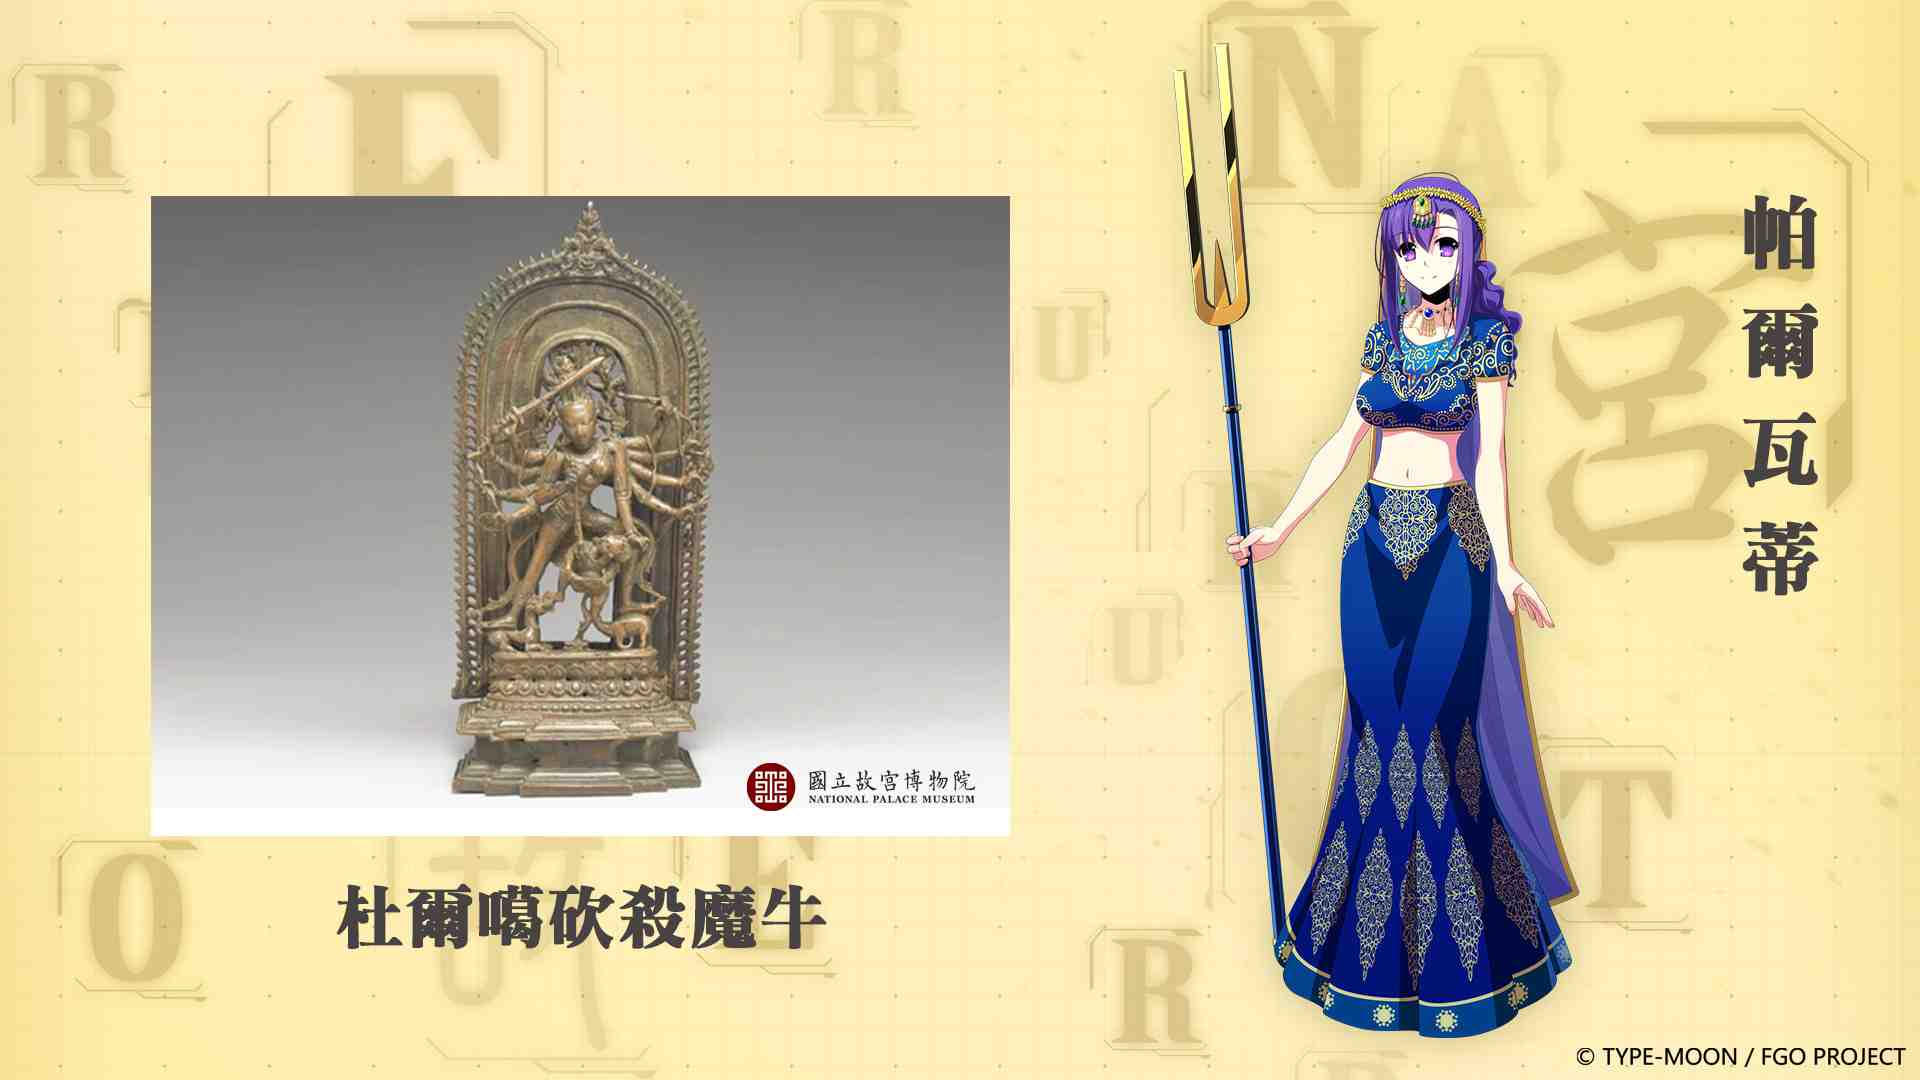 《Fate/Grand Order》繁中版 ╳ 國立故宮博物院跨界合作